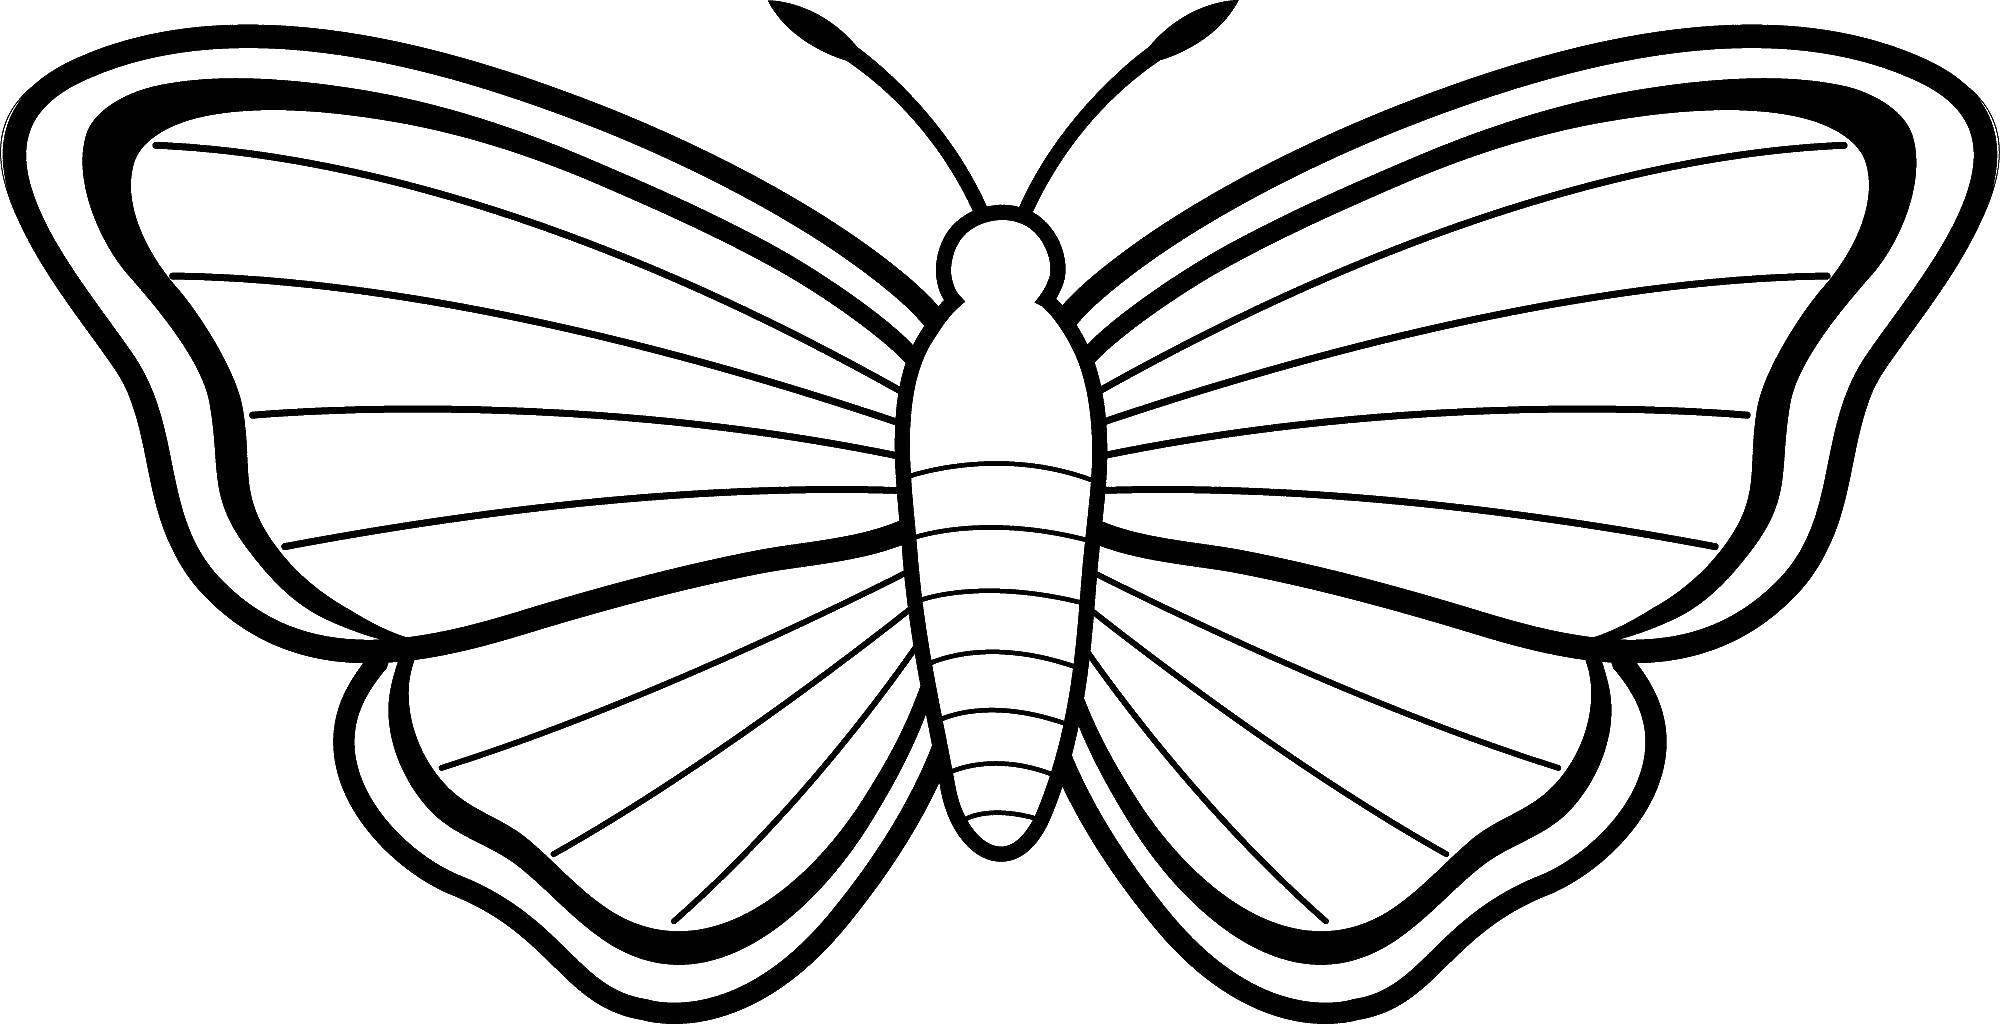 Название: Раскраска Бабочка. Категория: Бабочка. Теги: бабочки, бабочка, линии.